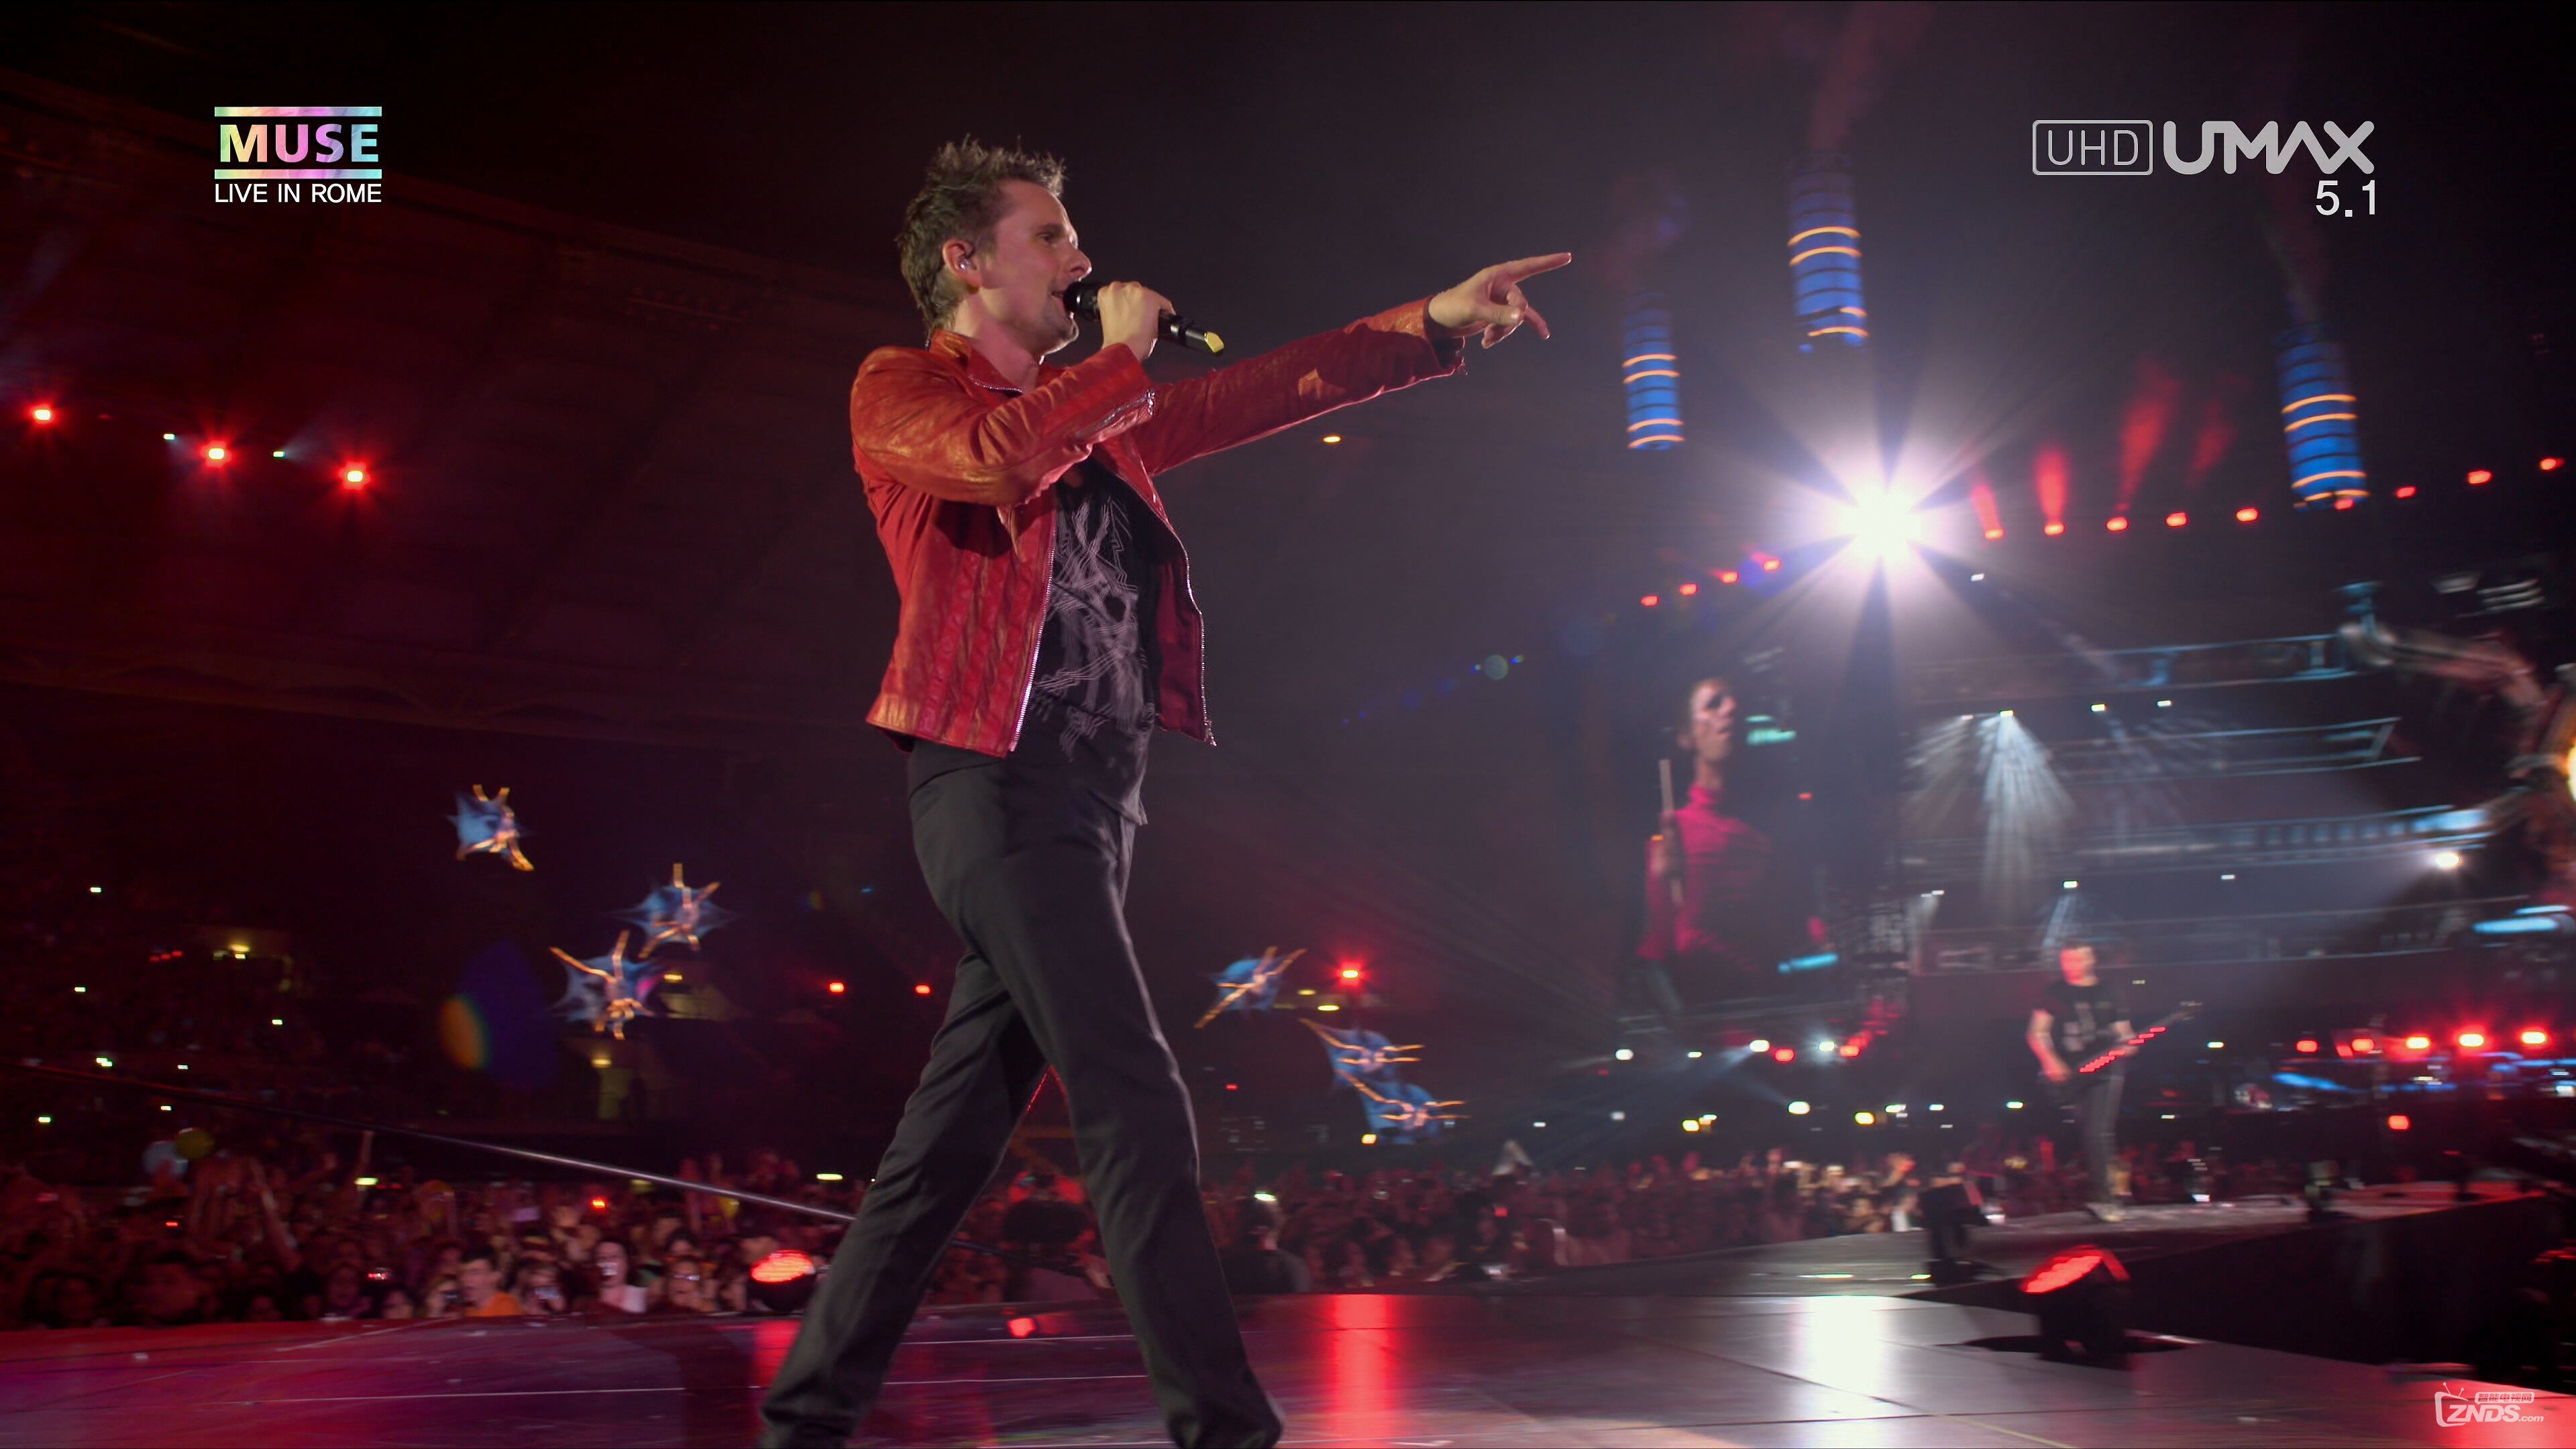 Muse.Live.At.Rome.Olympic.Stadium.2013.2160p.UHDTV.HEVC.mkv_20160313_001423.578.jpg